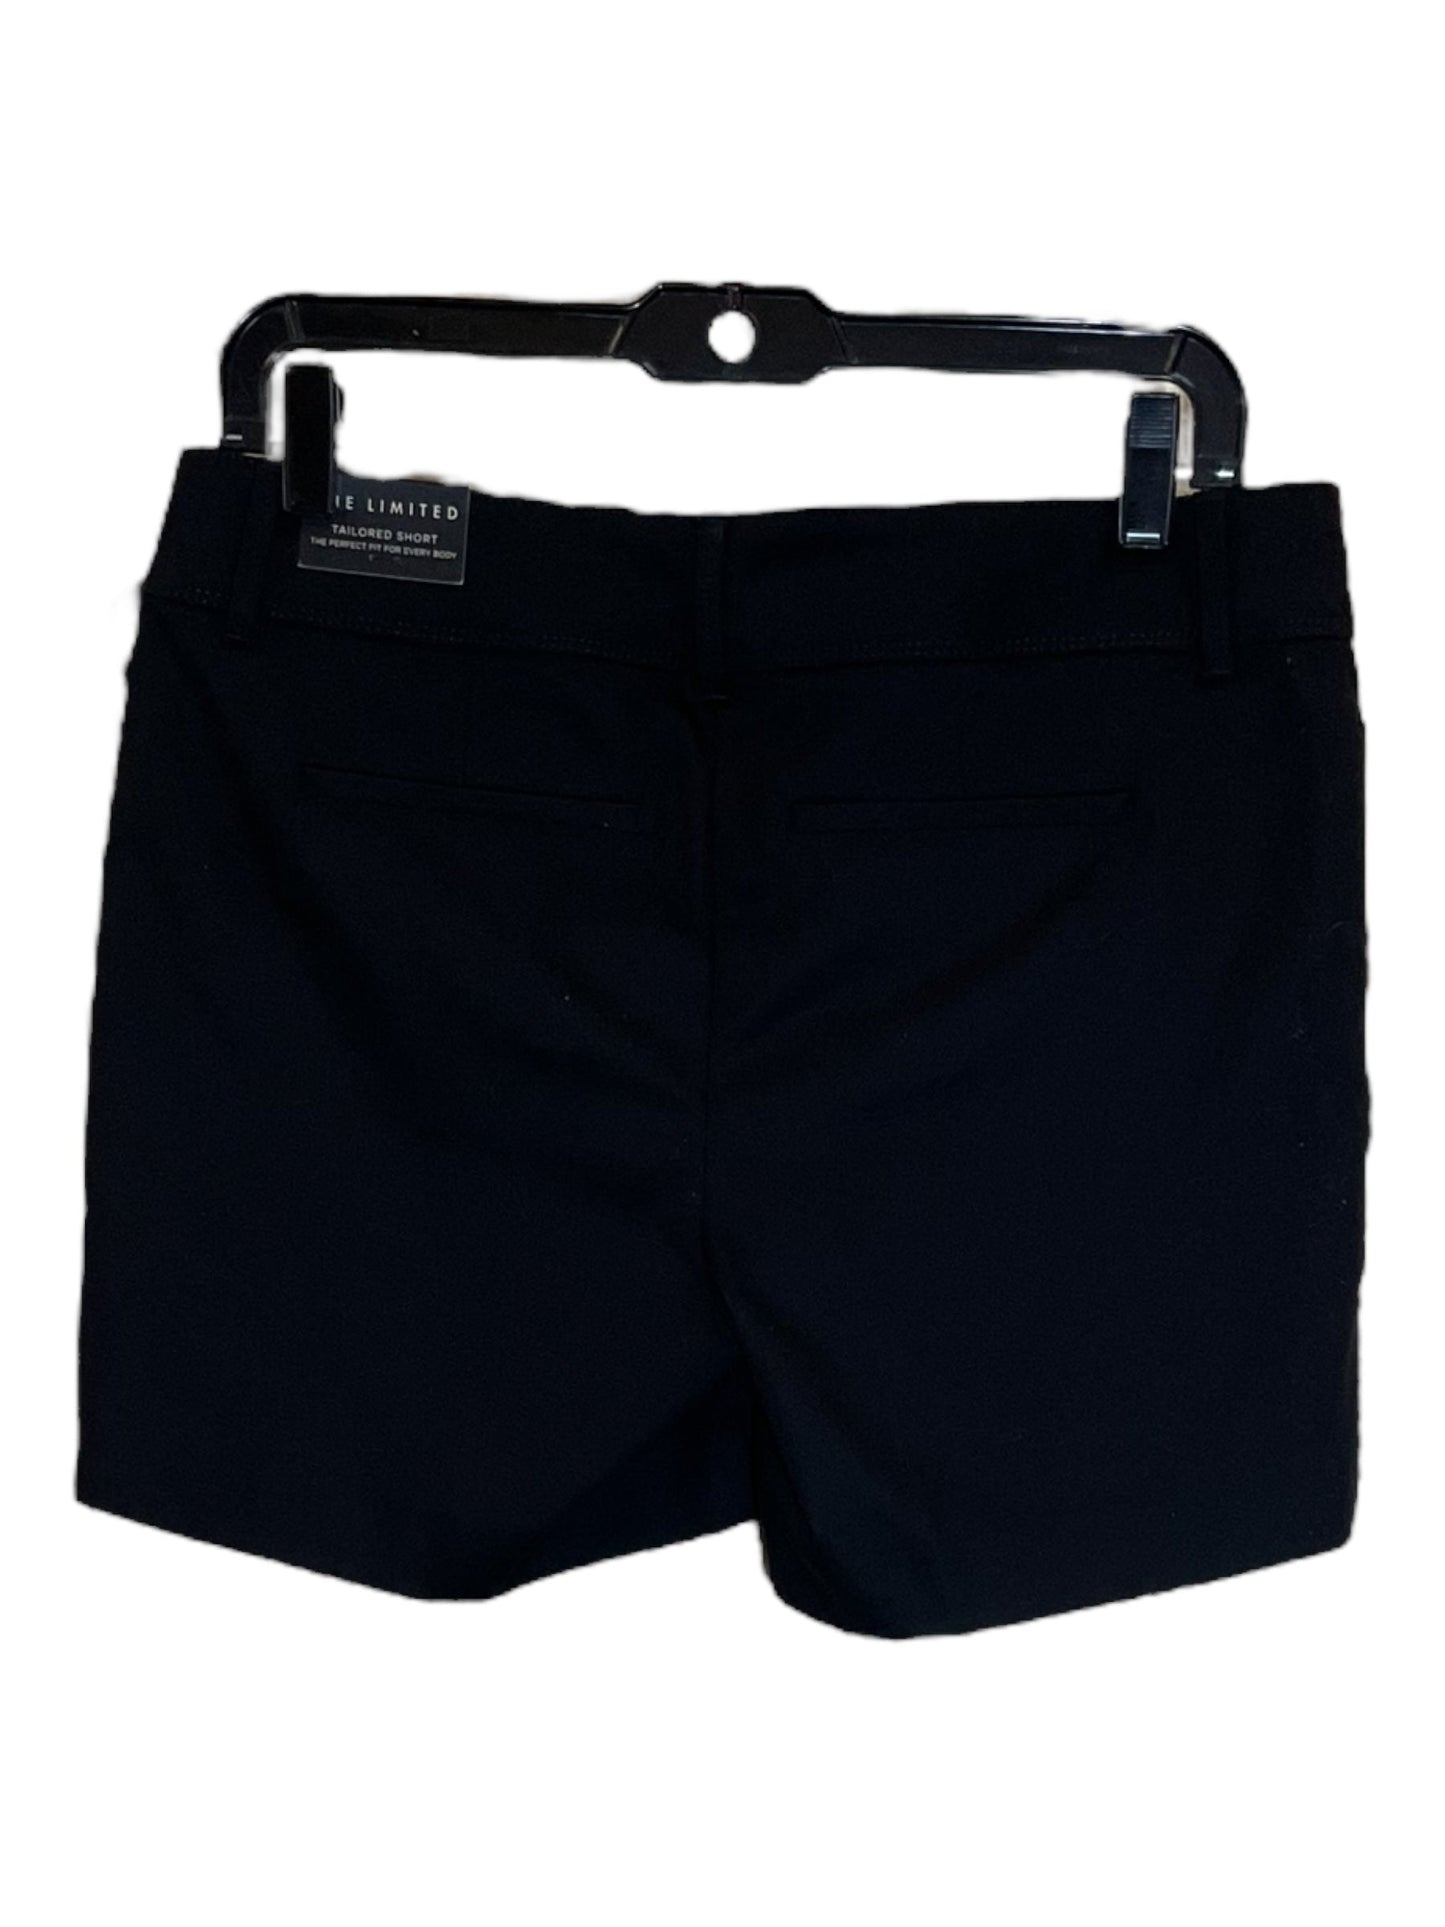 Black Shorts Limited, Size 4